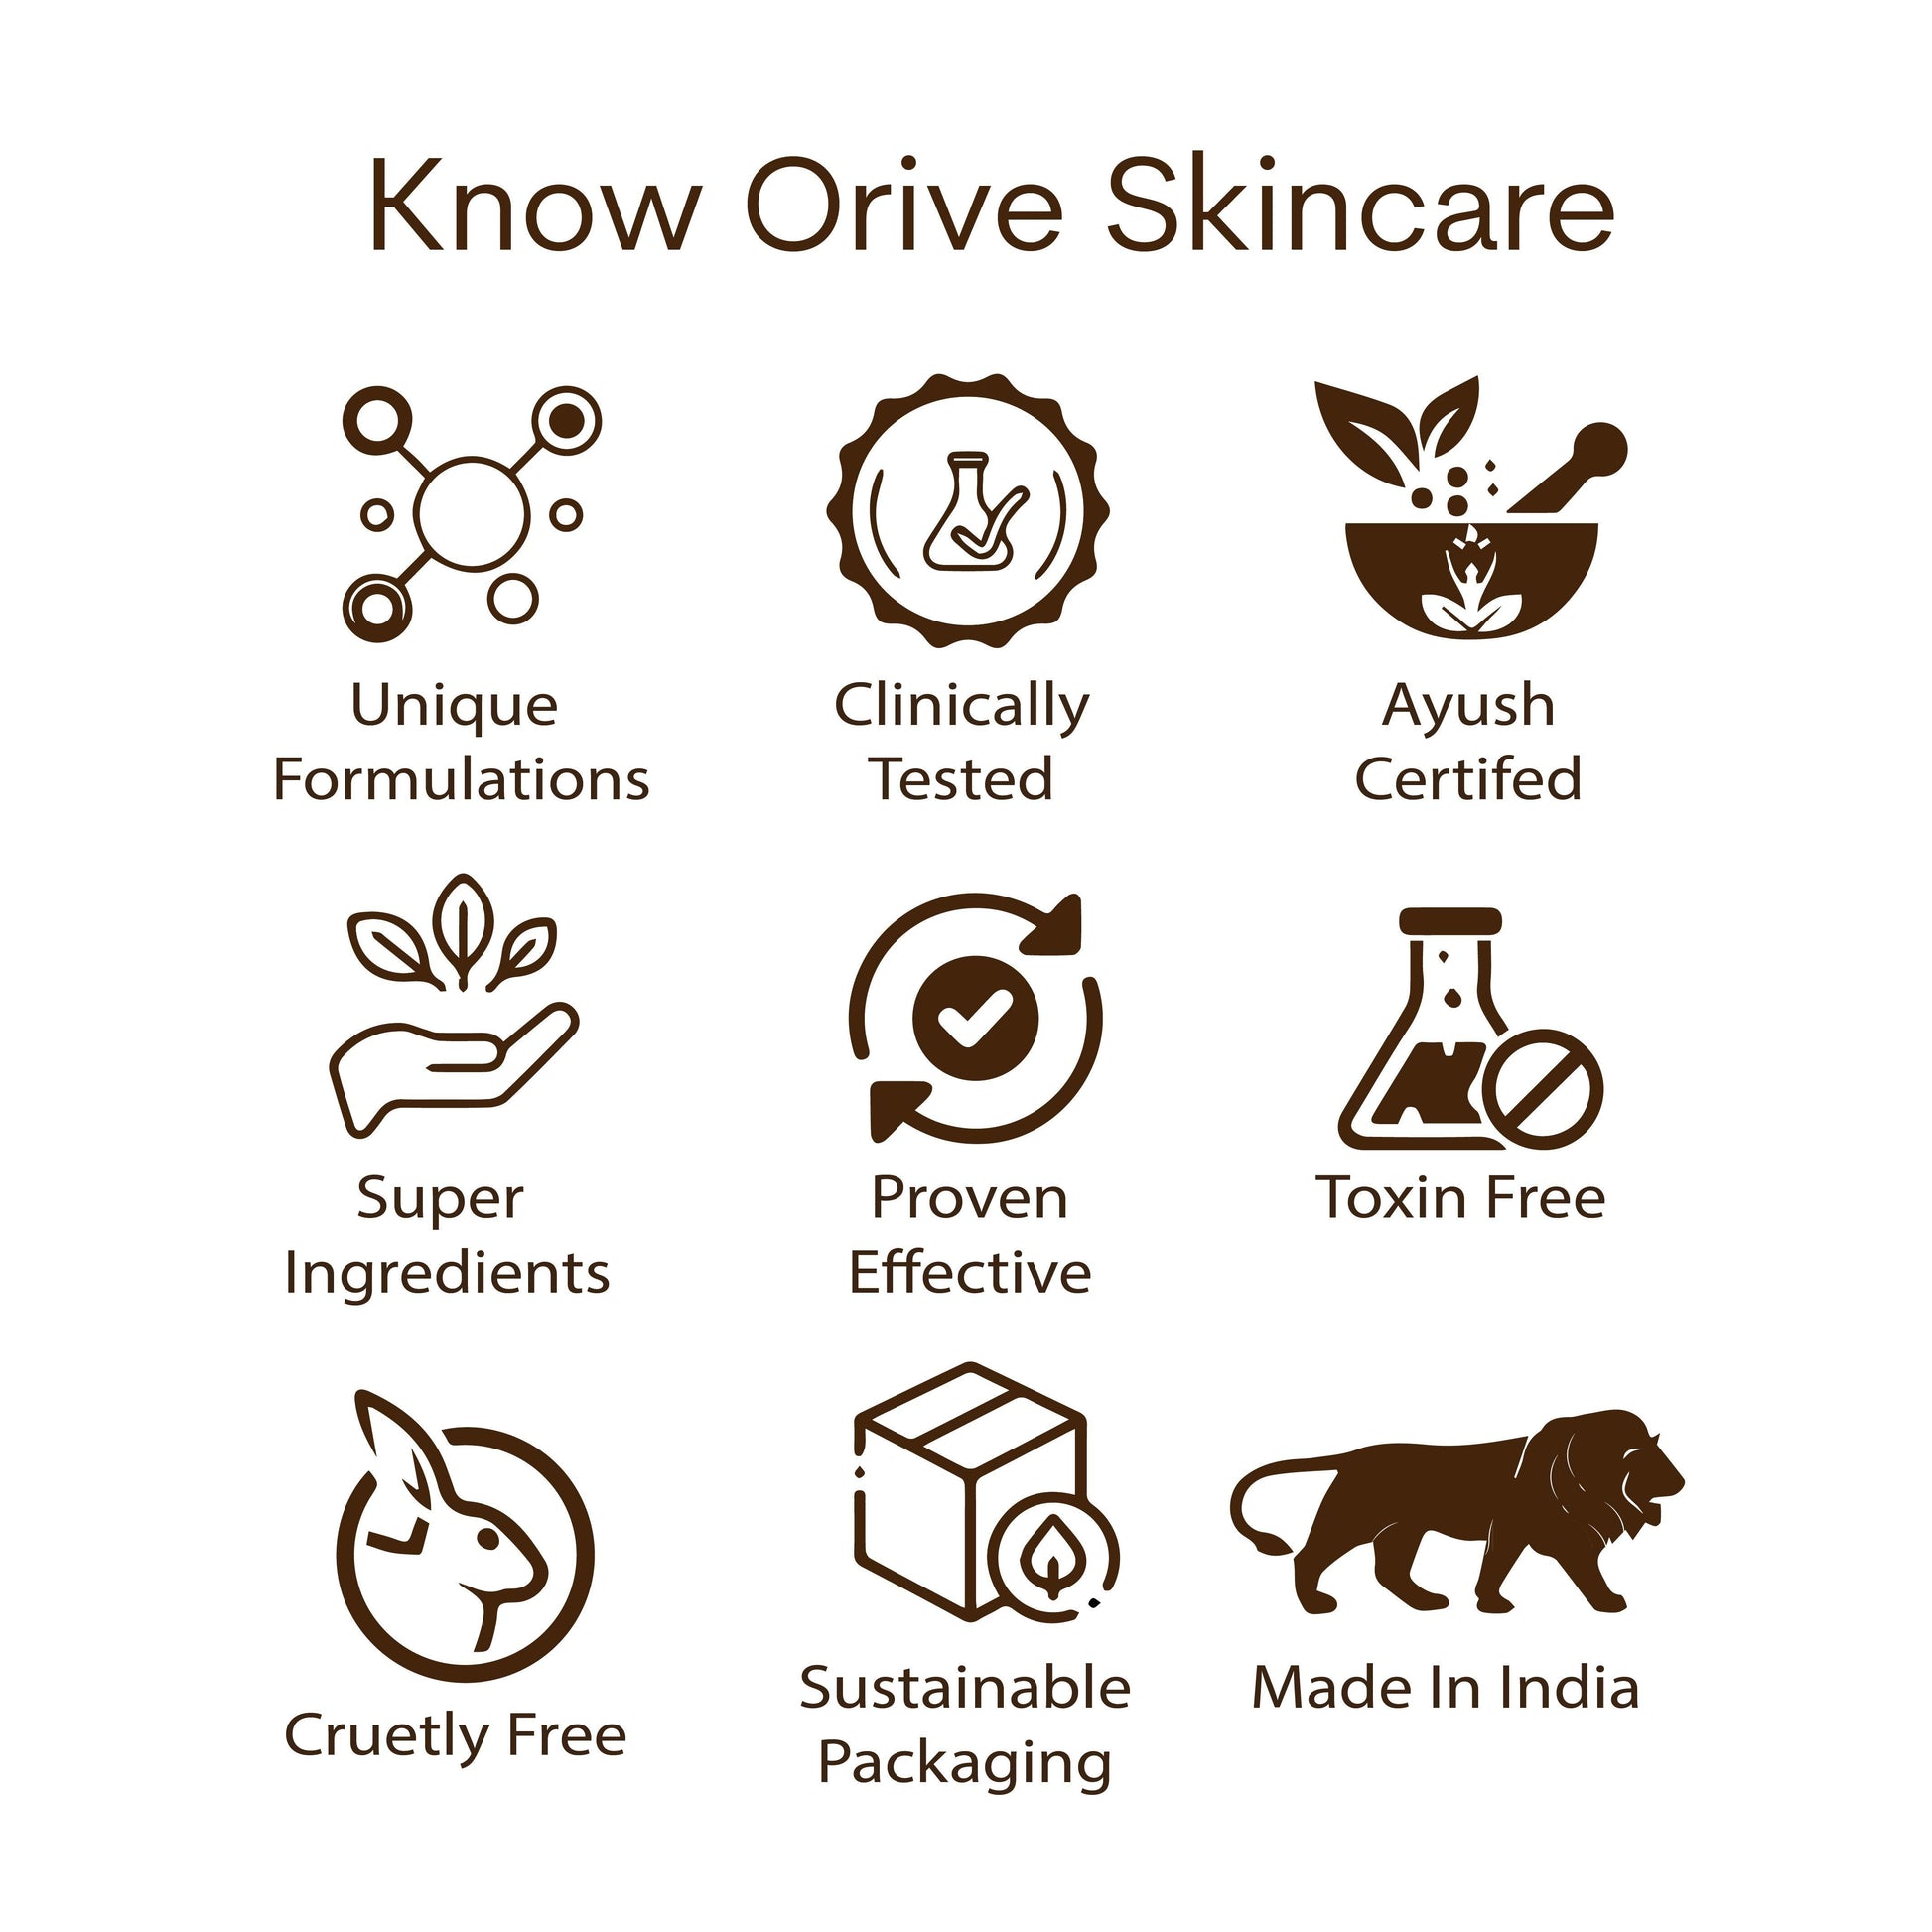 Rose Body Oil | Moisturises & Nourishes Skin - Orive Organics